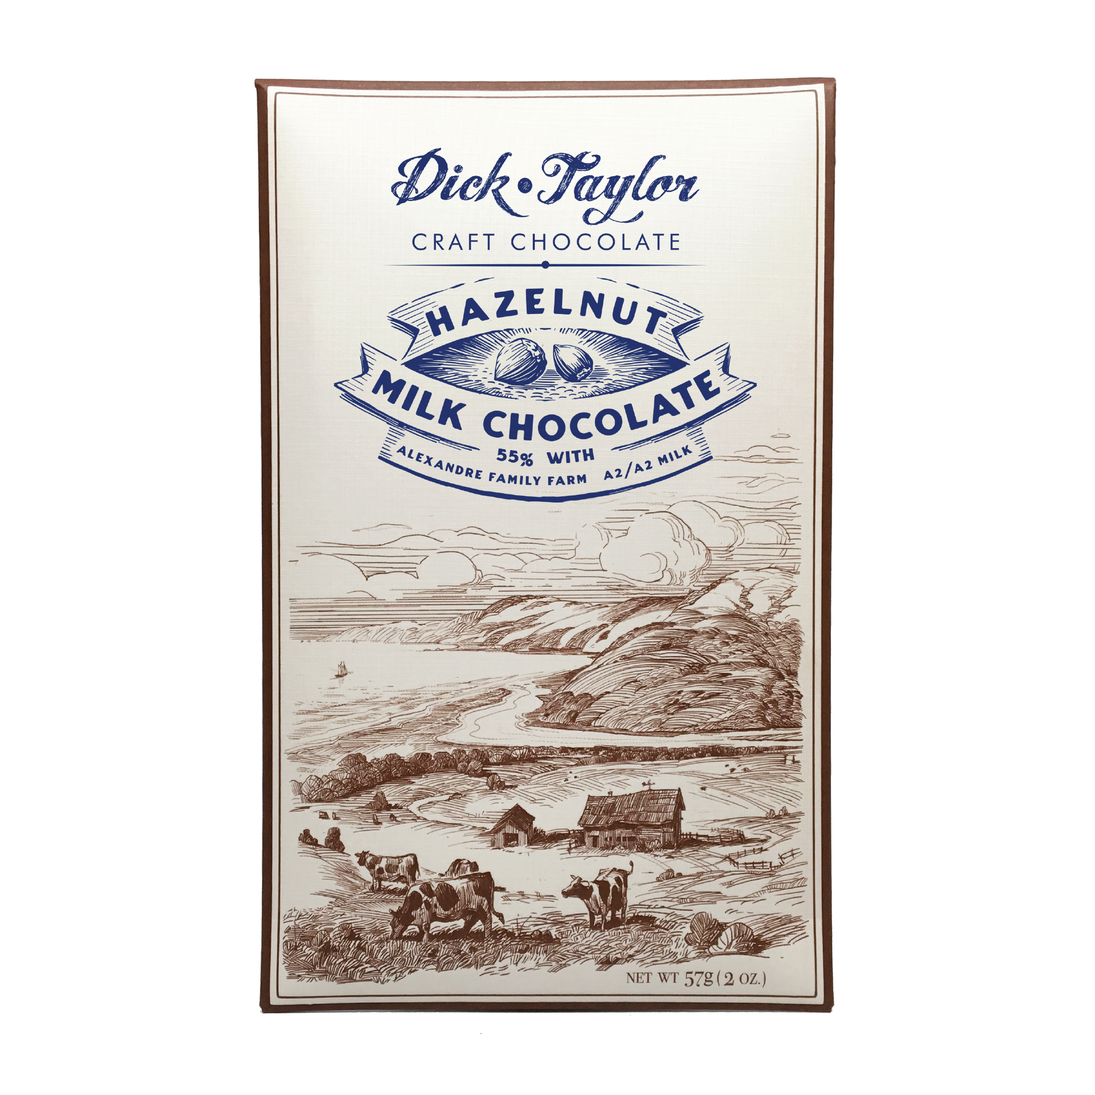 Dick Taylor Craft Chocolate - Hazelnut Milk Chocolate (2OZ | 55%)